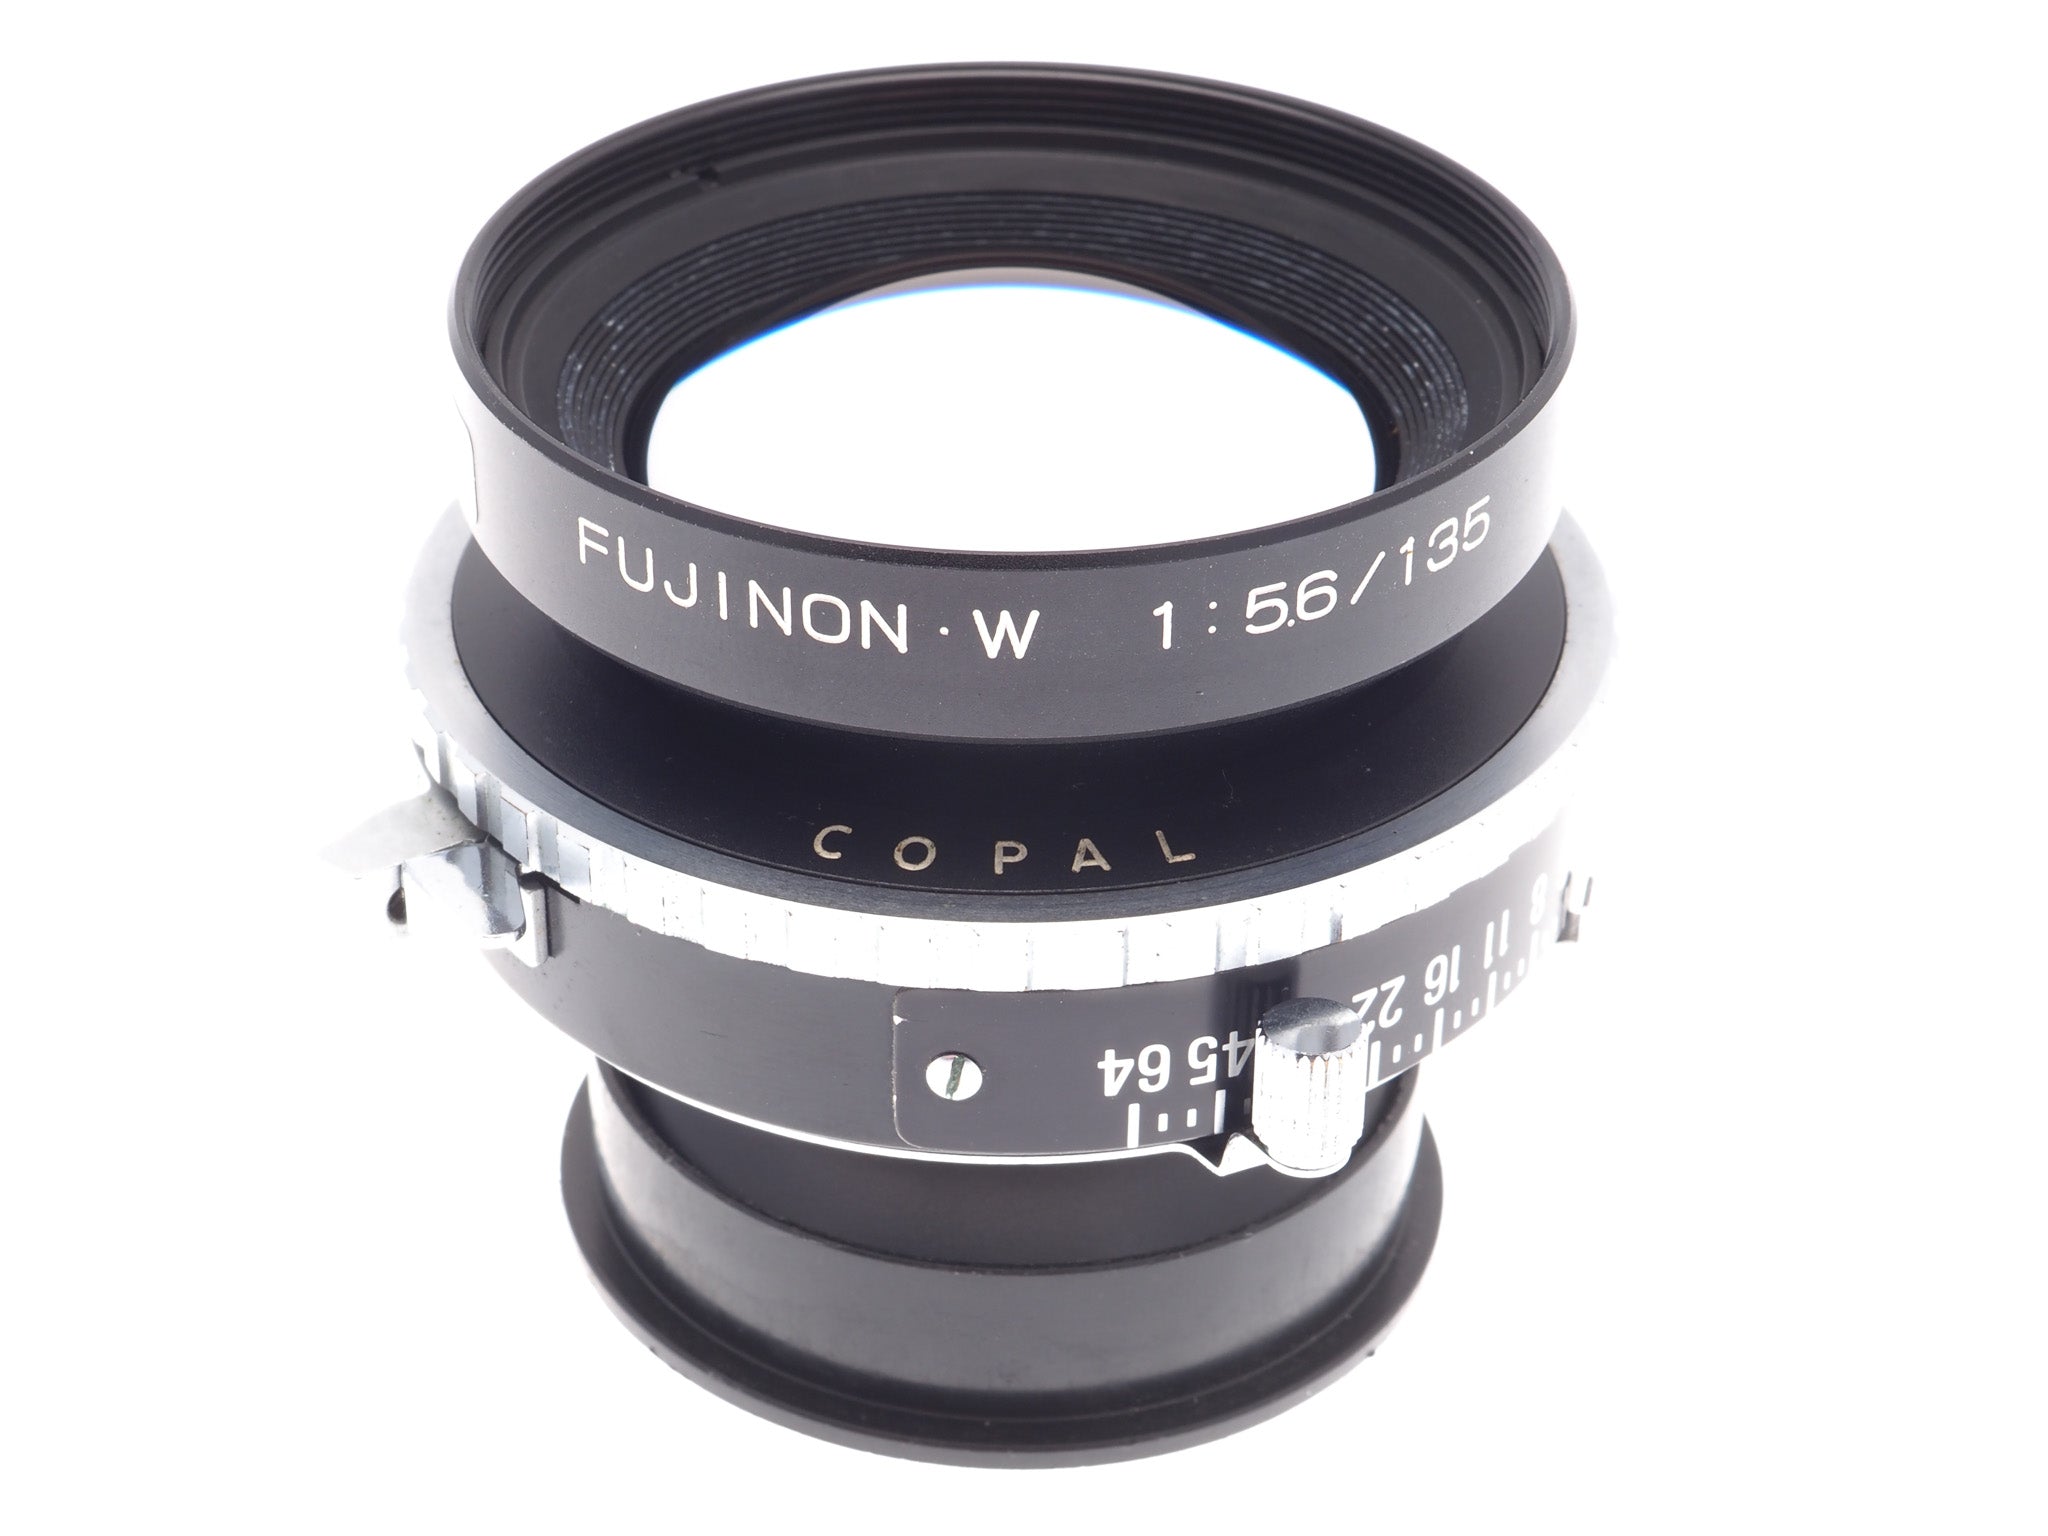 Fuji 135mm f5.6 Fujinon-W (Shutter) - Lens – Kamerastore